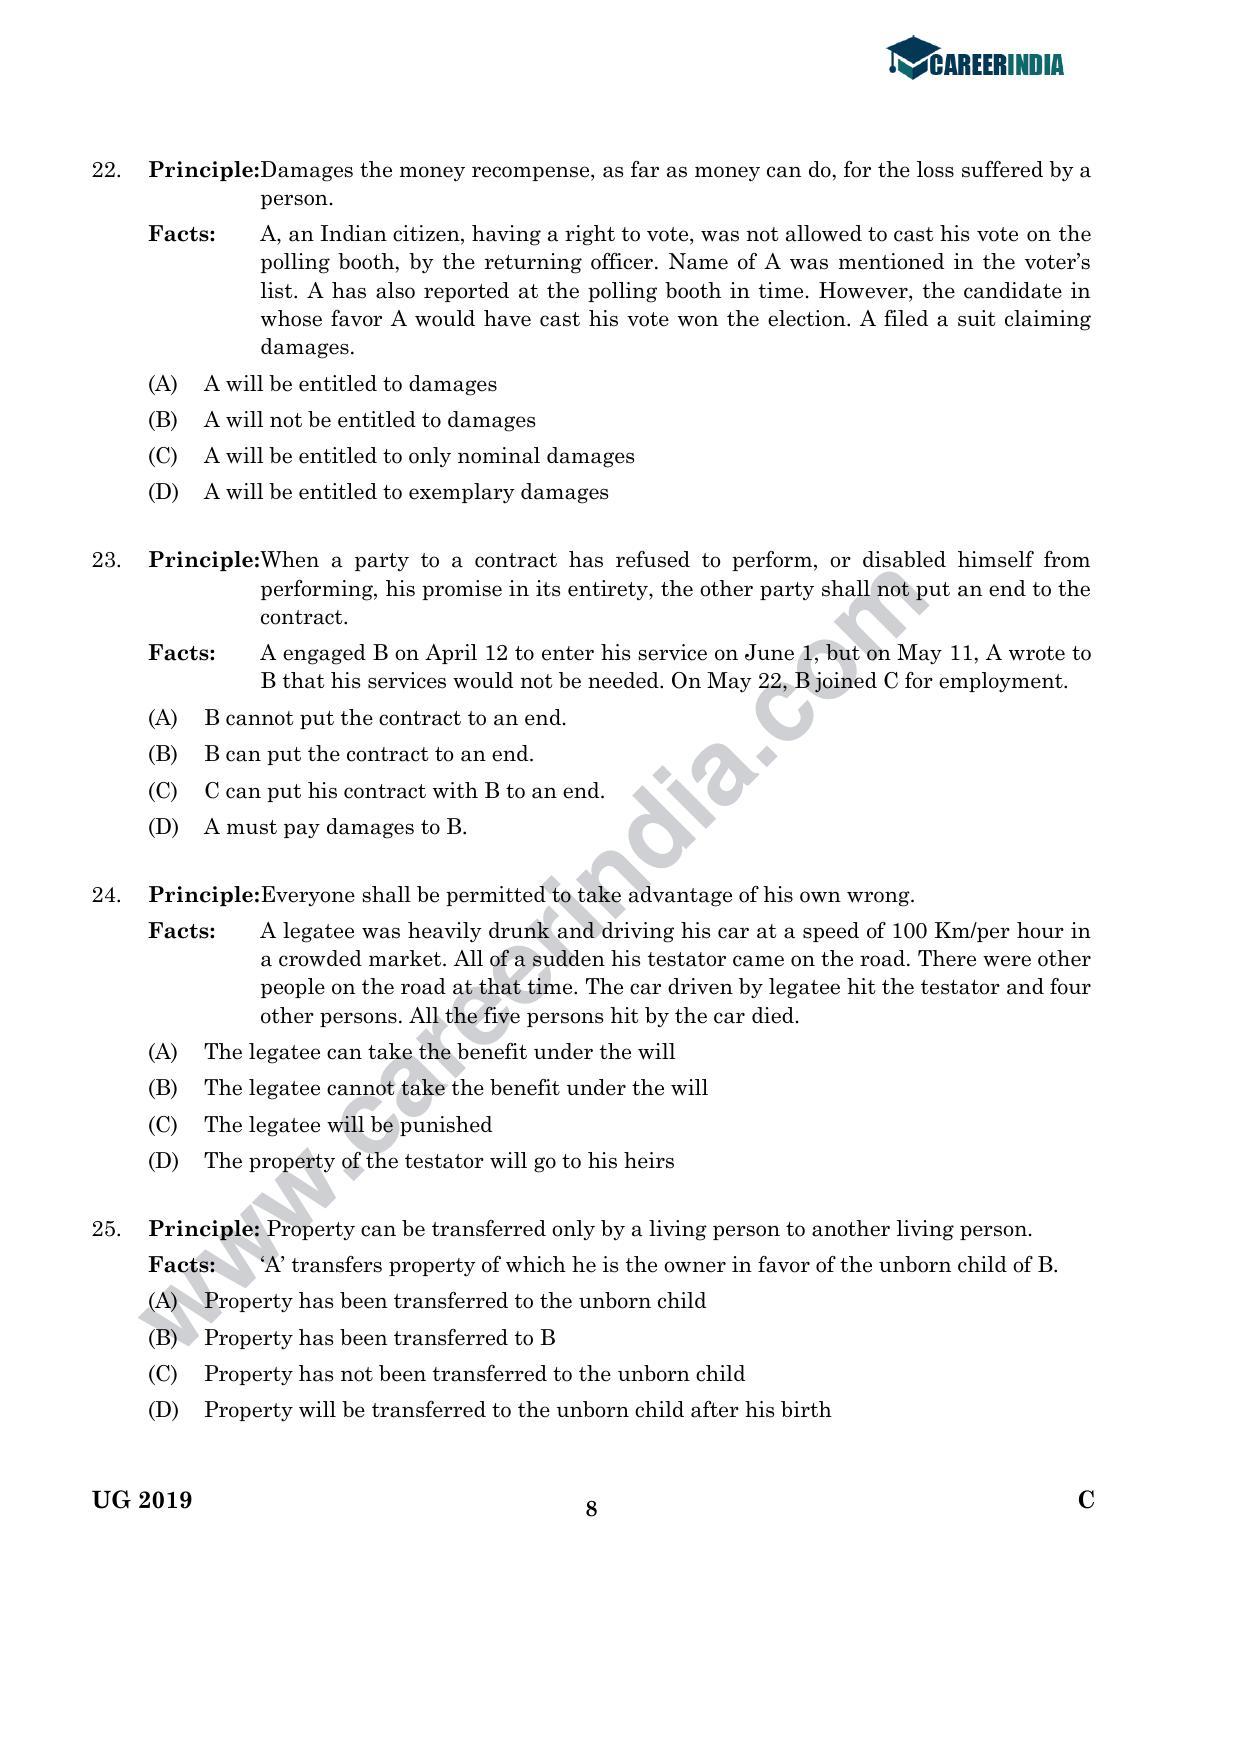 CLAT 2019 UG Legal-Aptitude Question Paper - Page 7